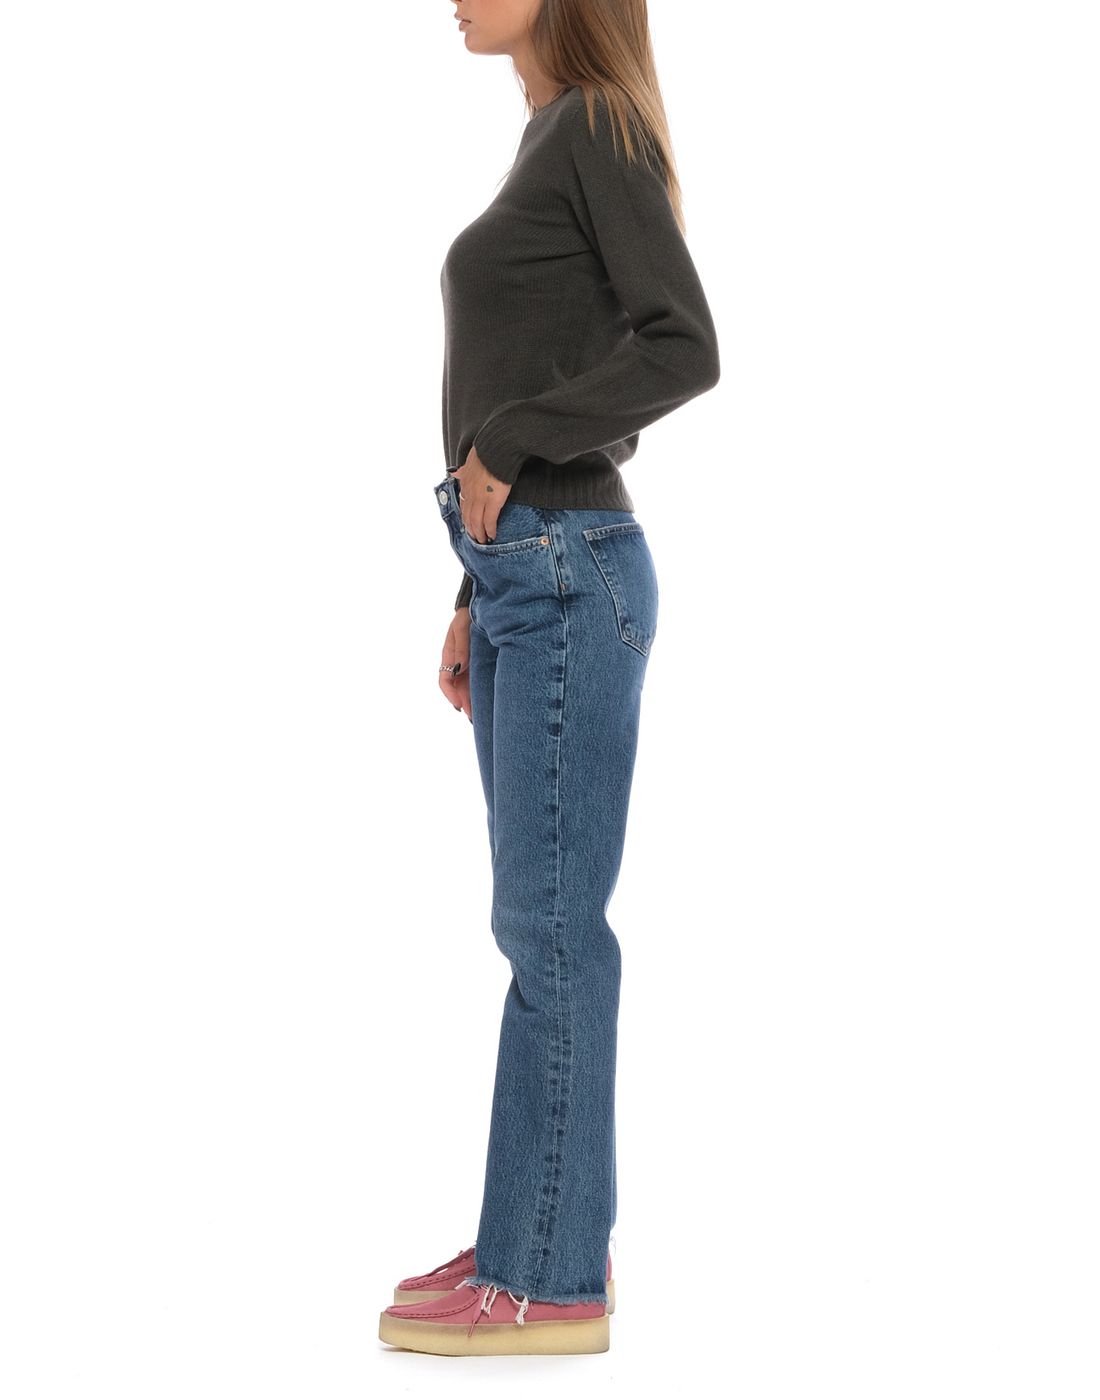 Jeans da donna A180 1371 SPHERE AGOLDE